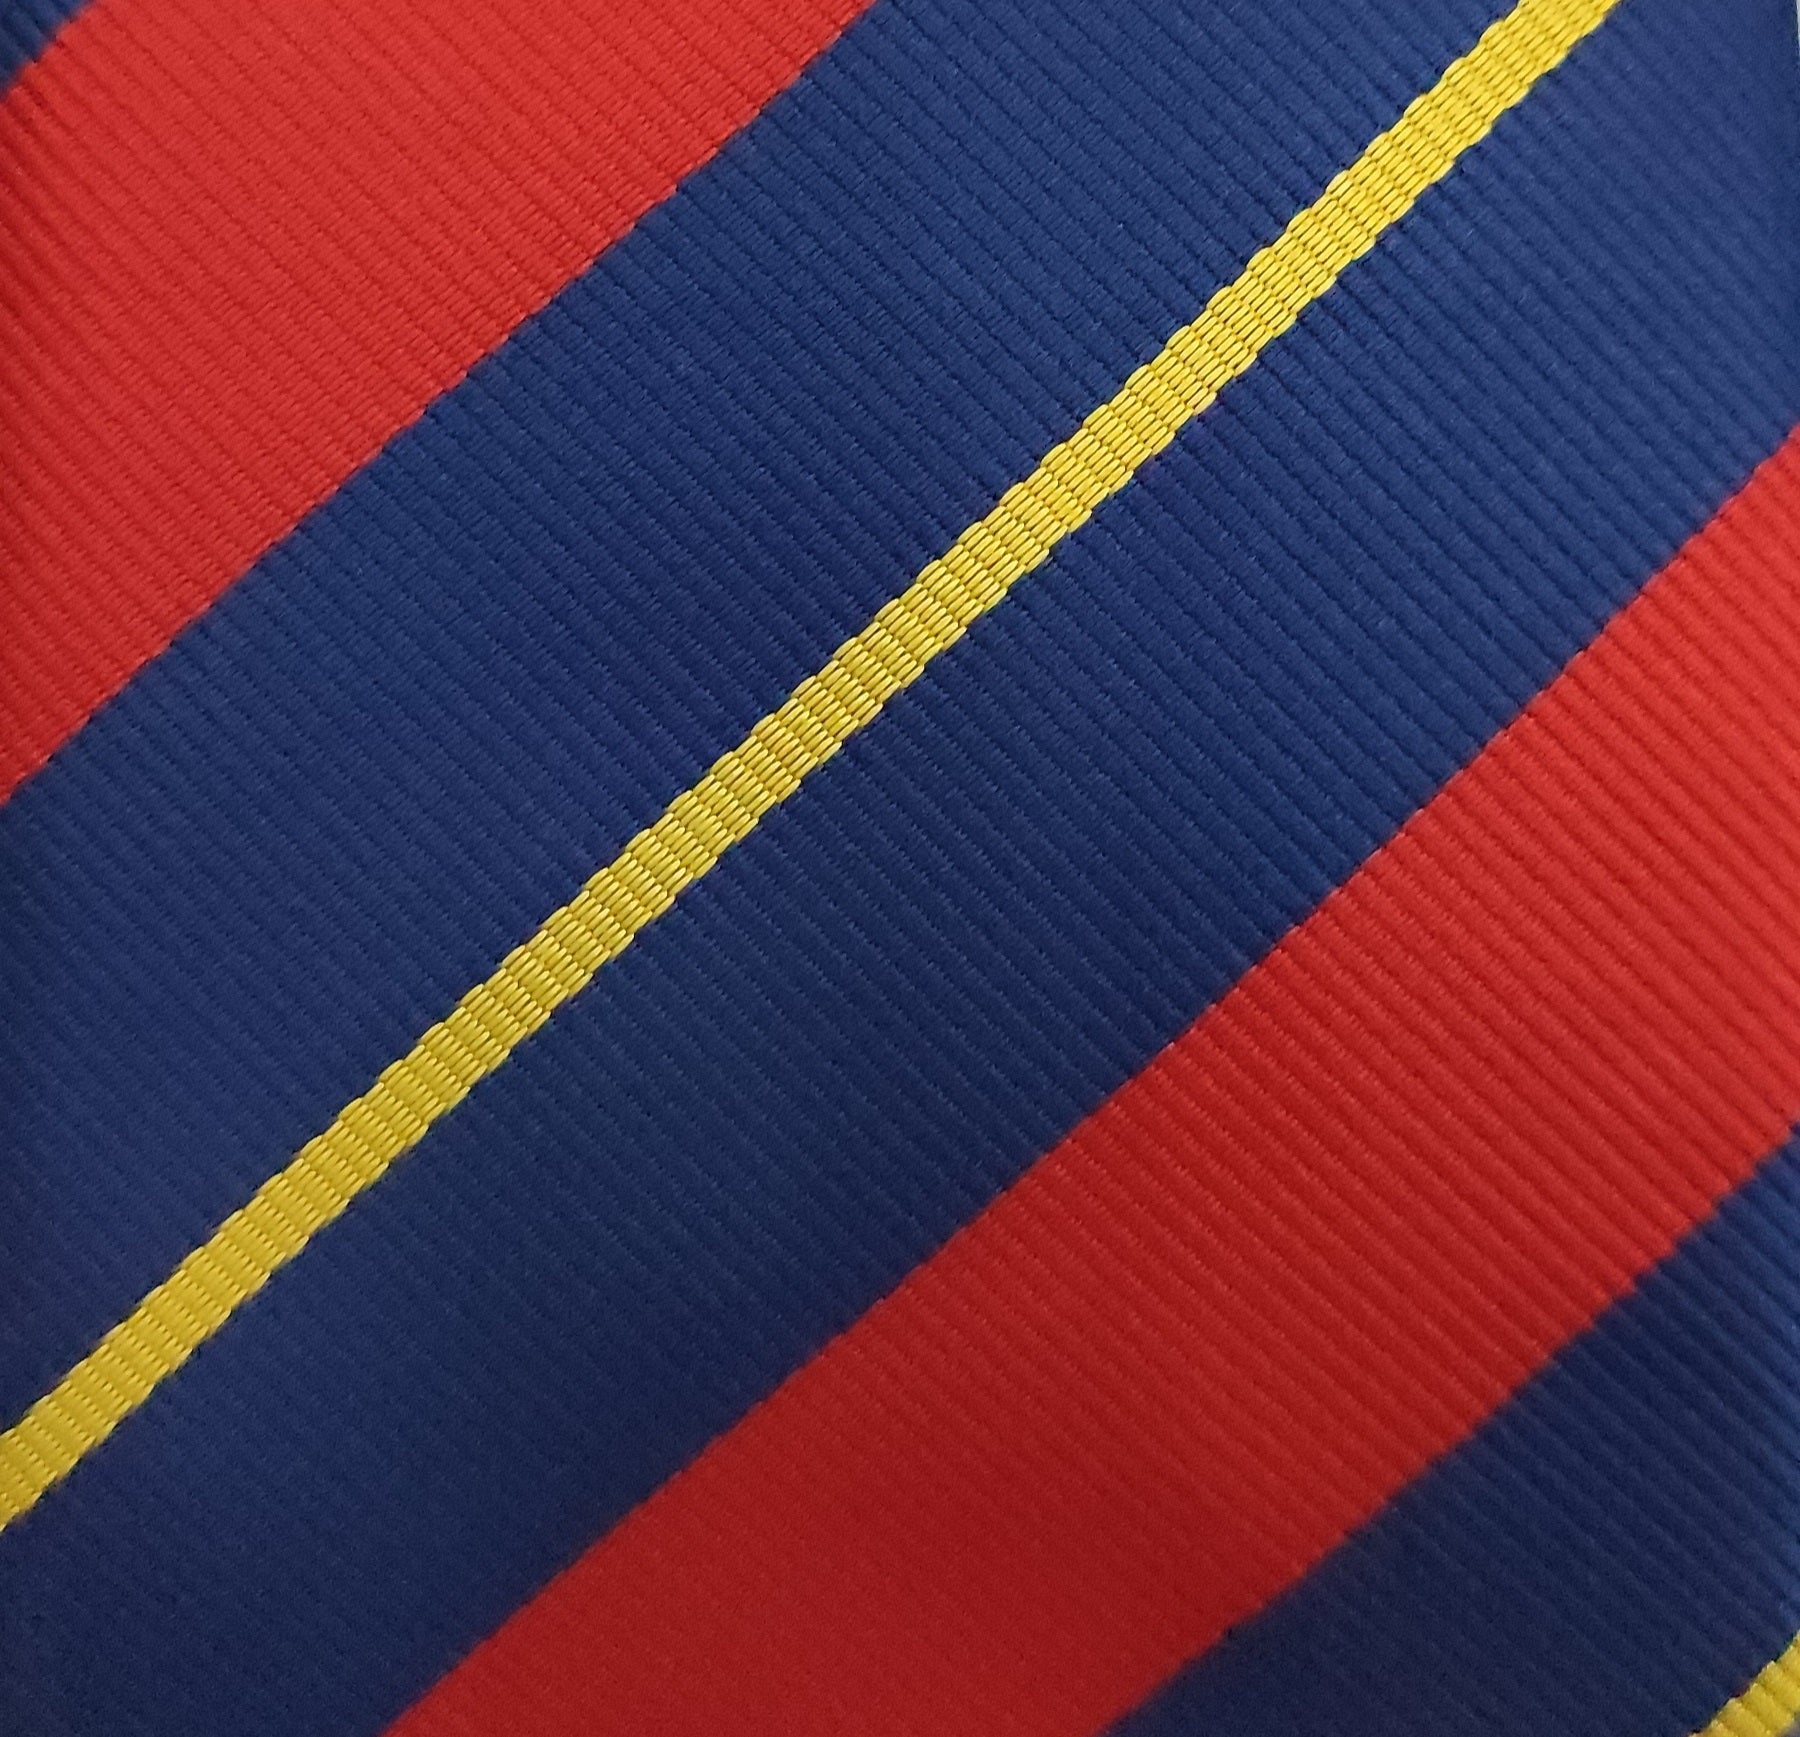 Blue, Red & Yellow Wide Stripped Microfiber Necktie